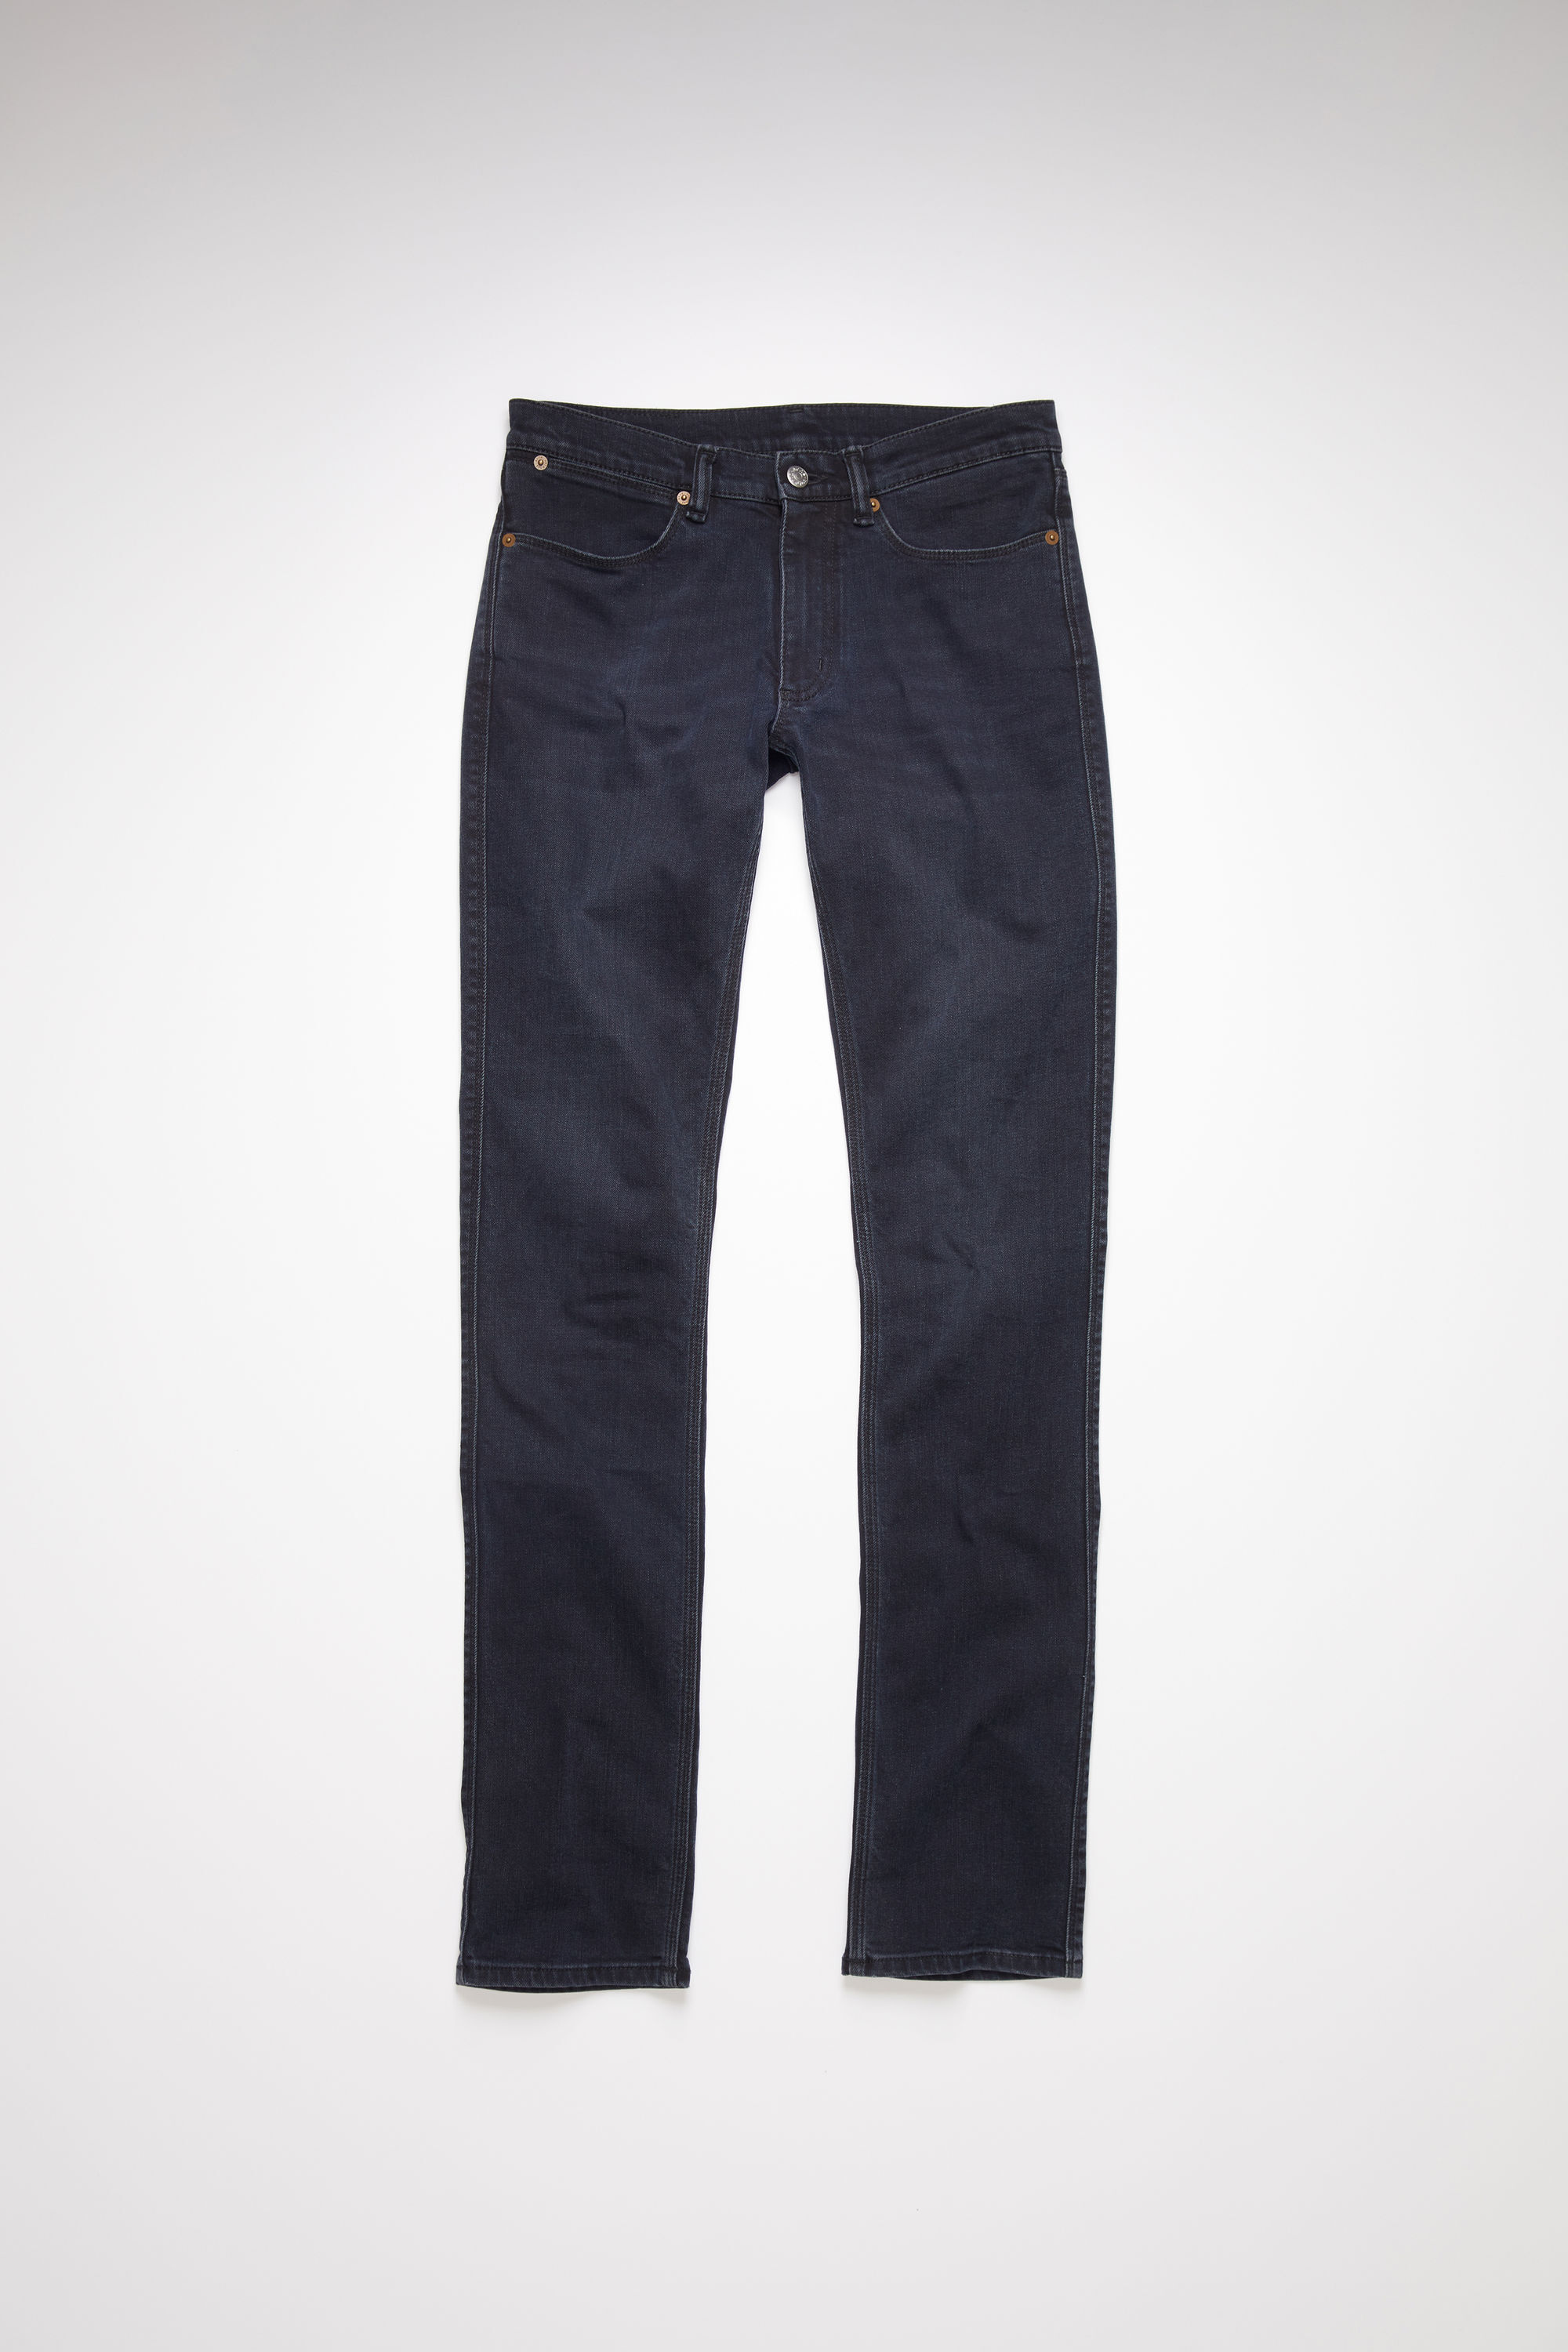 Buy DOLCE CRUDO Black Skinny Fit High Rise Denim Jeans online